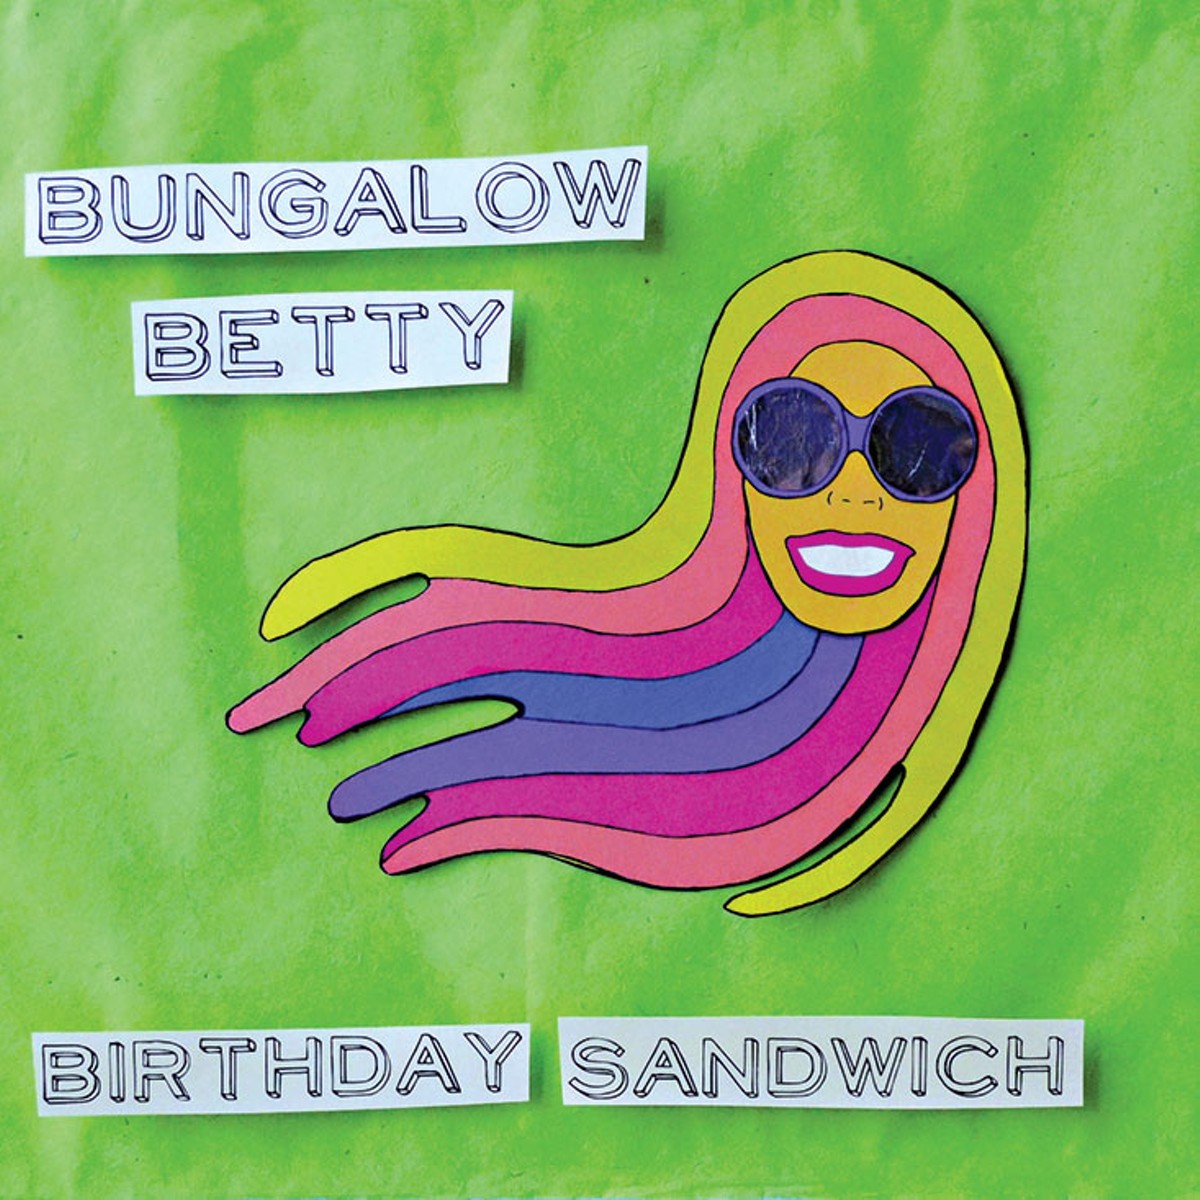 Bungalow Betty